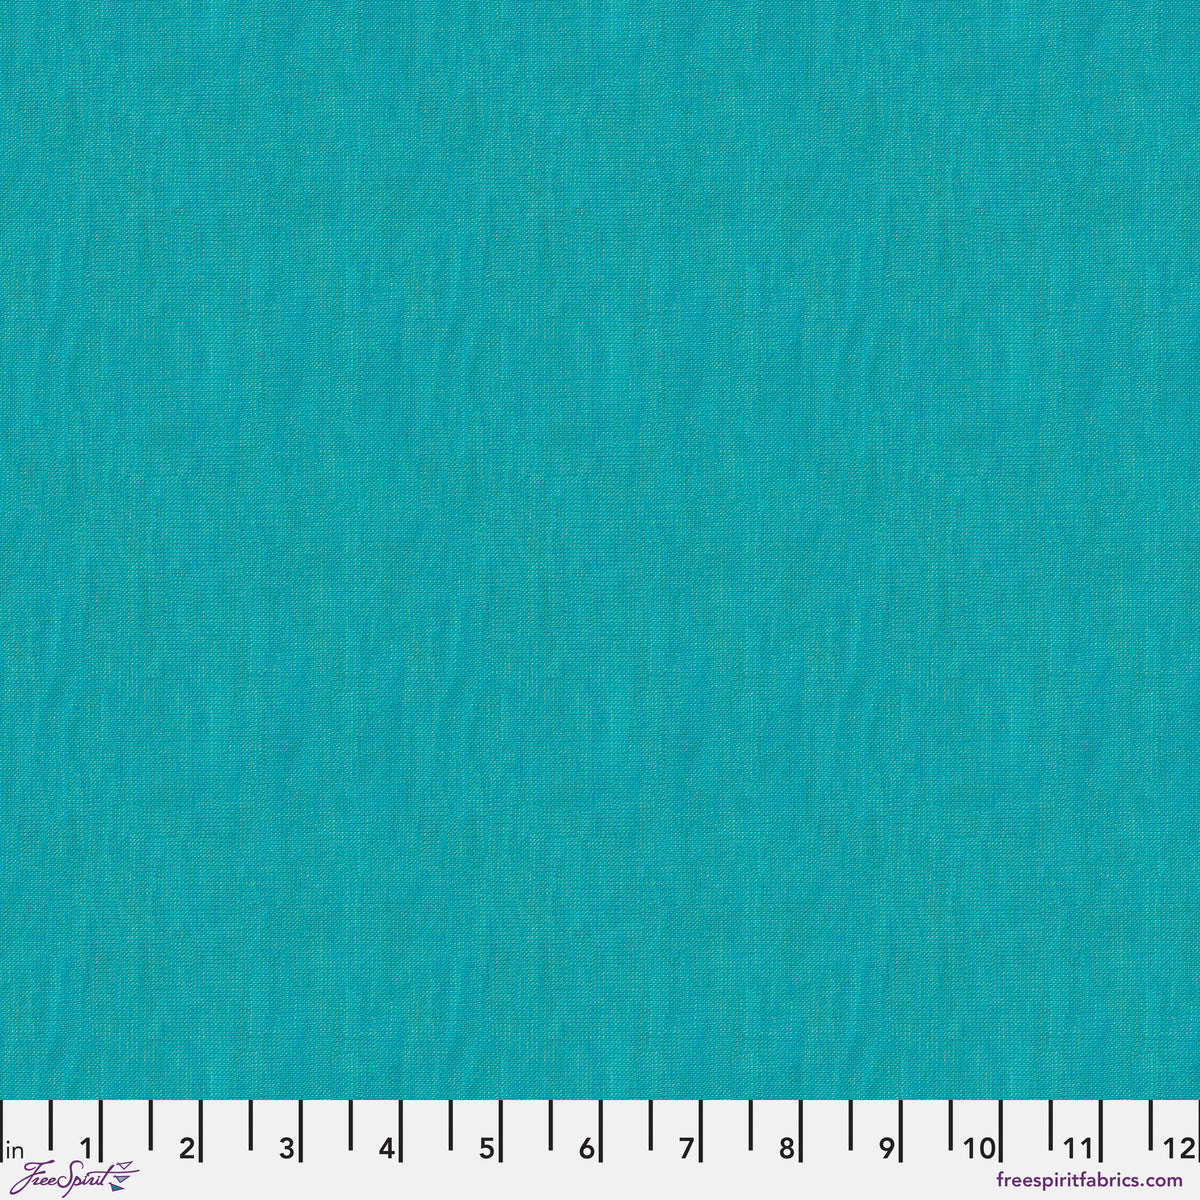 Kaffe Fassett Quilt Fabric - Shot Cottons in Glacier Blue  - SCGP124.GLACIER